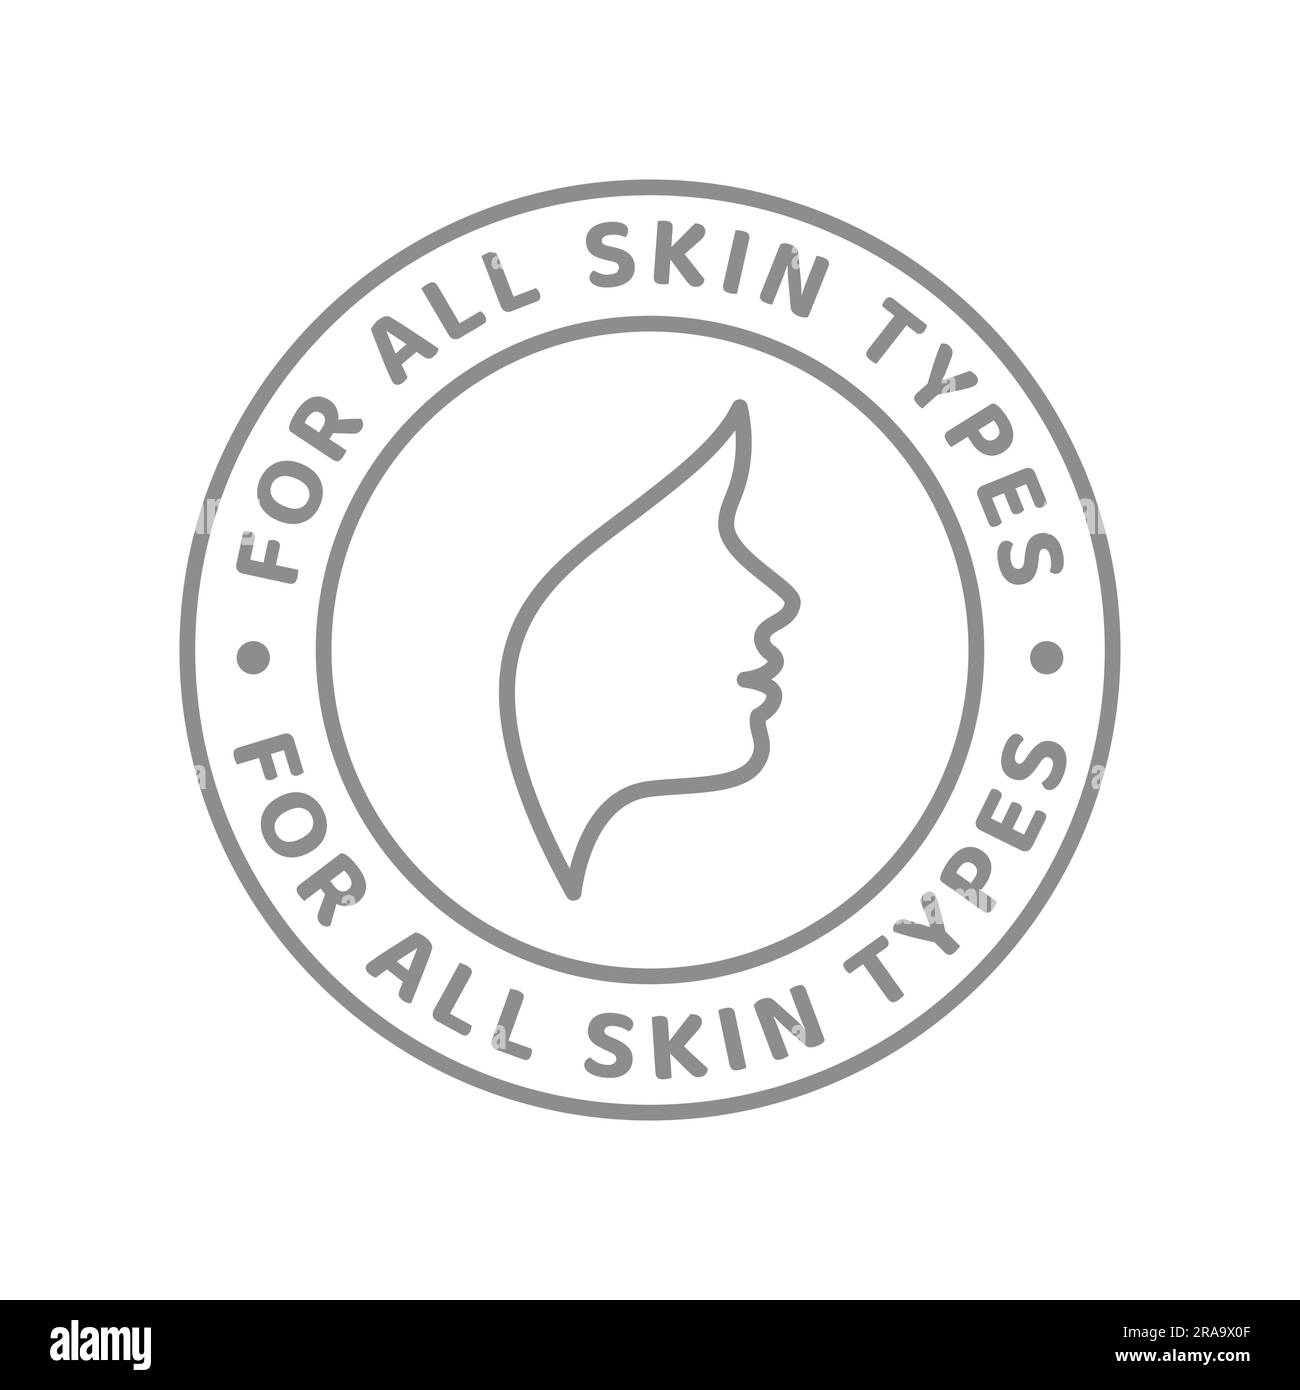 skin care logo